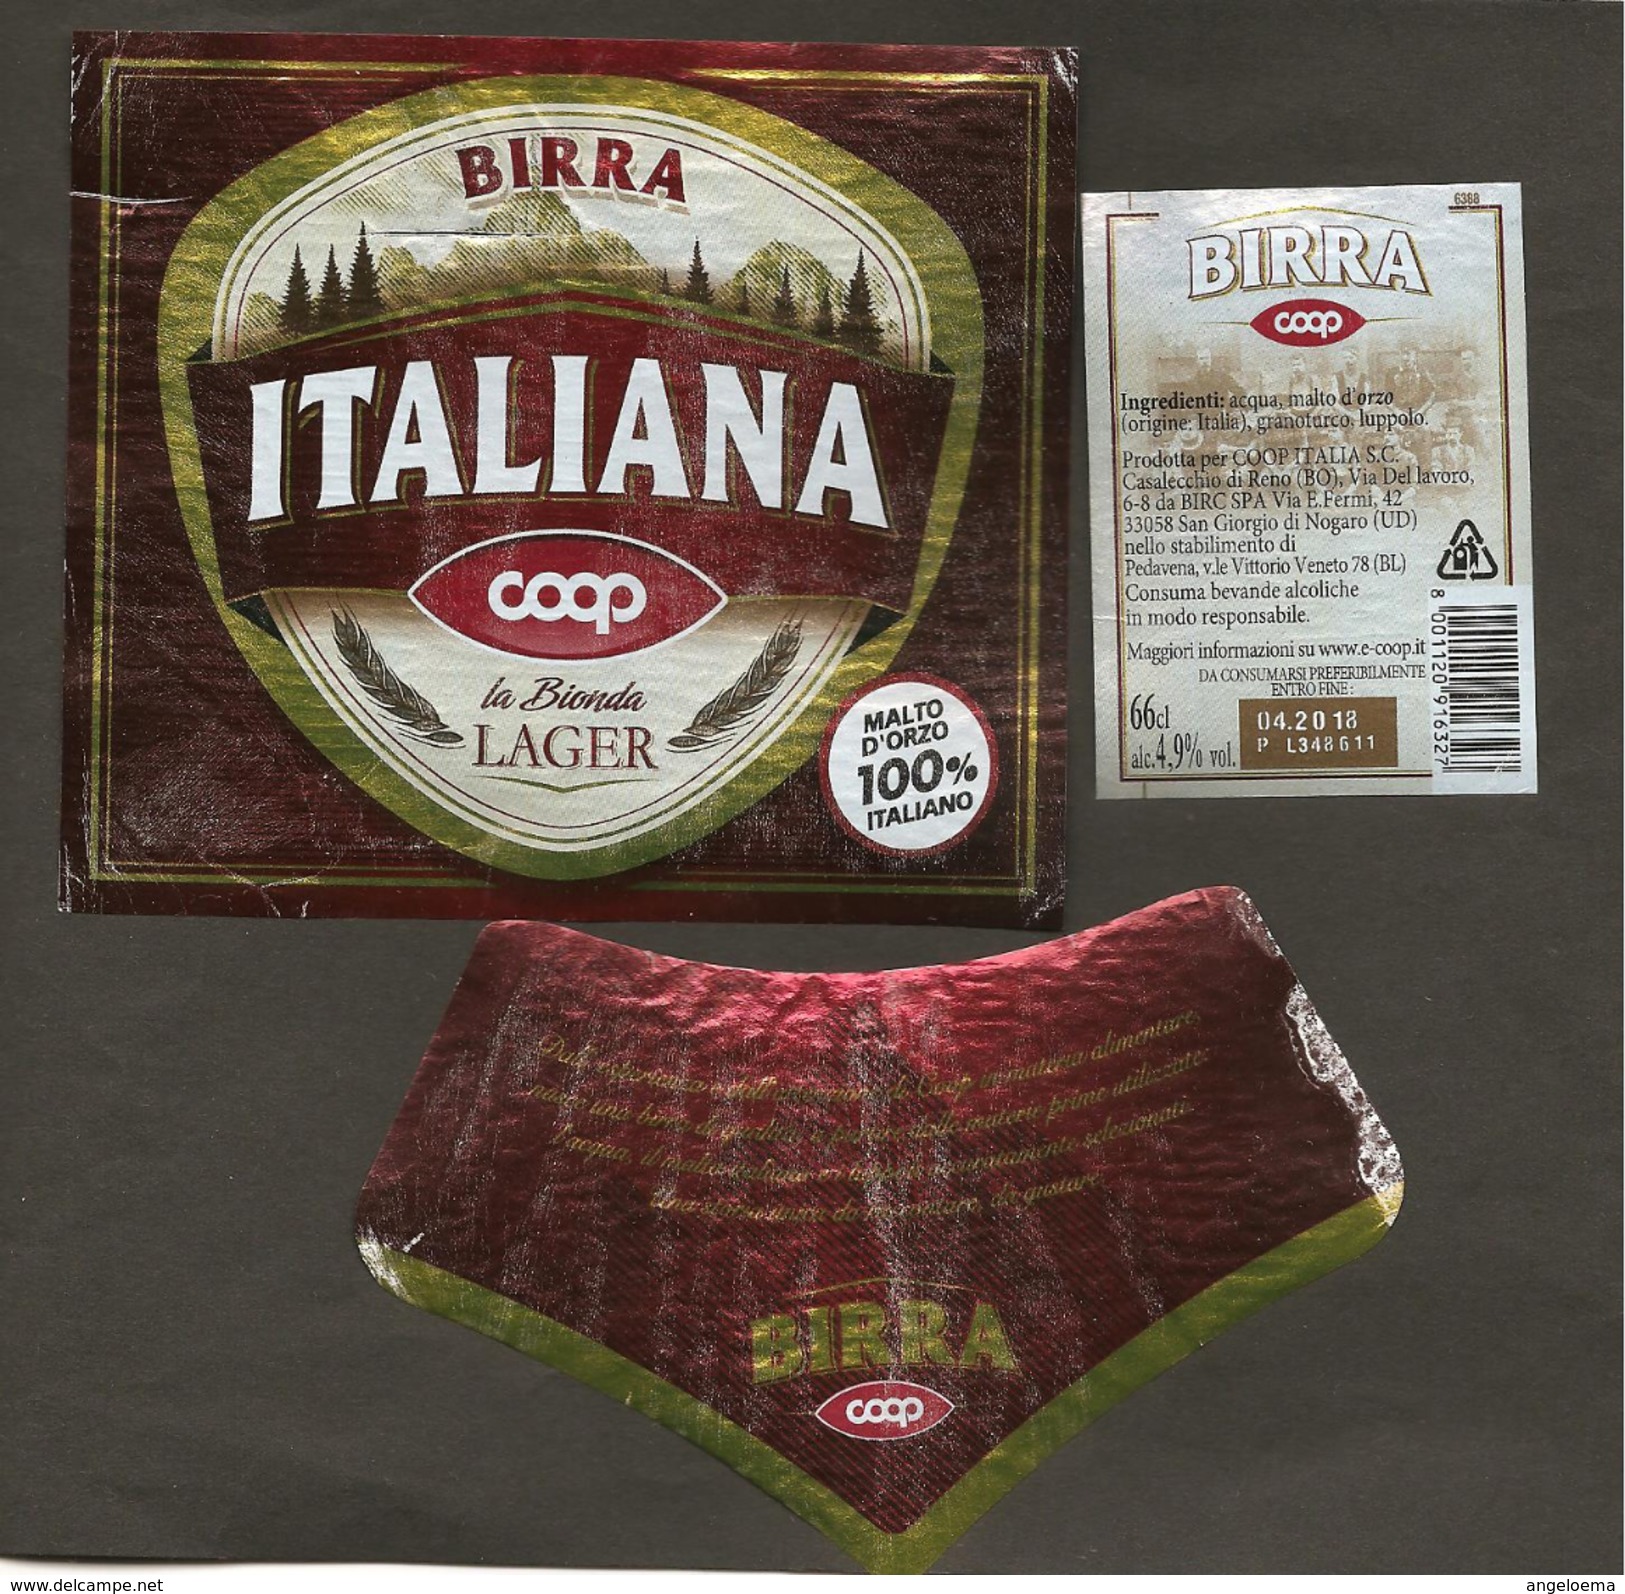 ITALIA - Etichetta Birra Bière Beer ITALIANA COOP - Bière